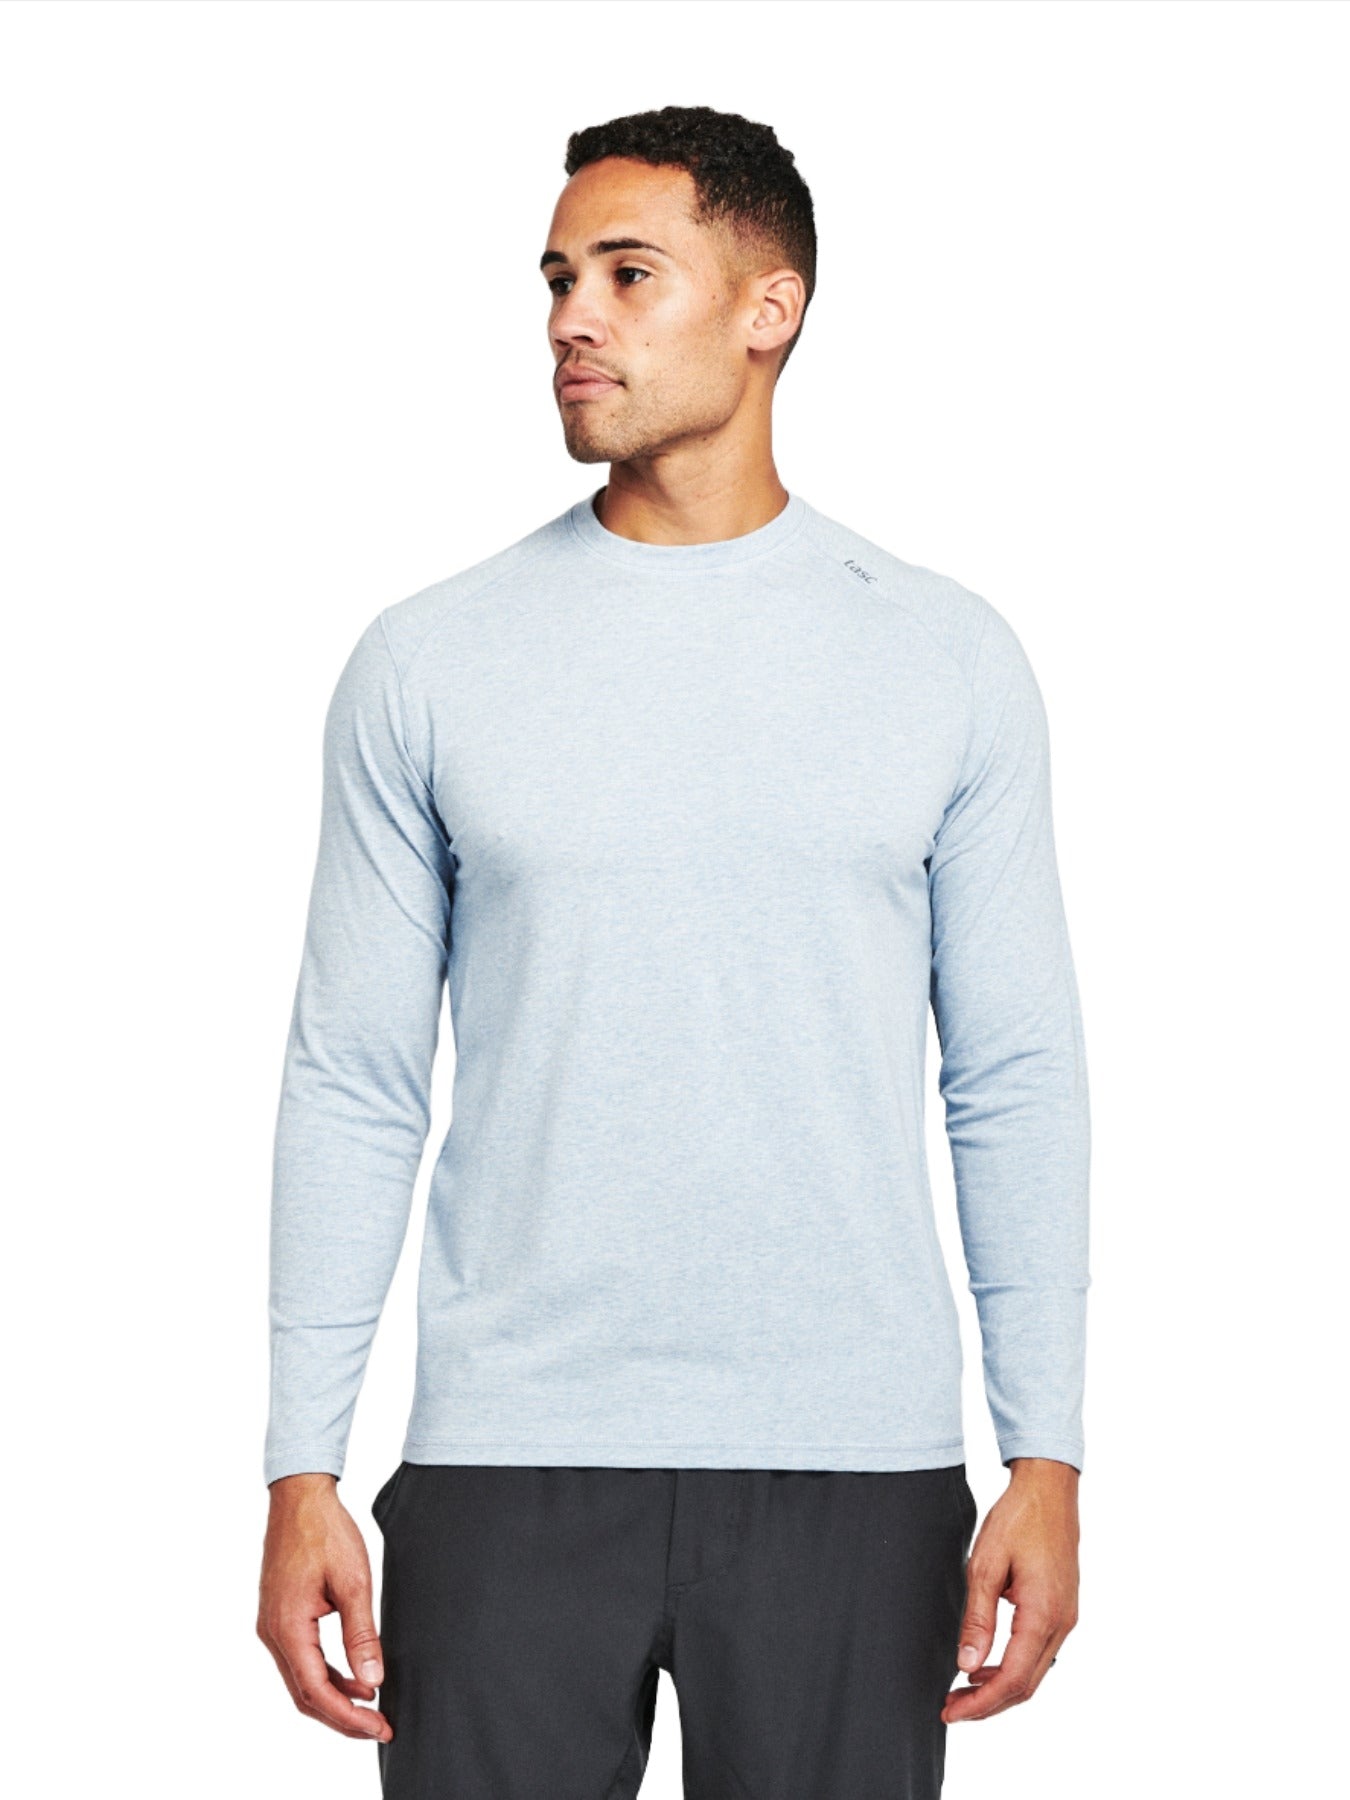 Tasc Men's Carrollton Long Sleeve Fitness T-Shirt Apparel Tasc   